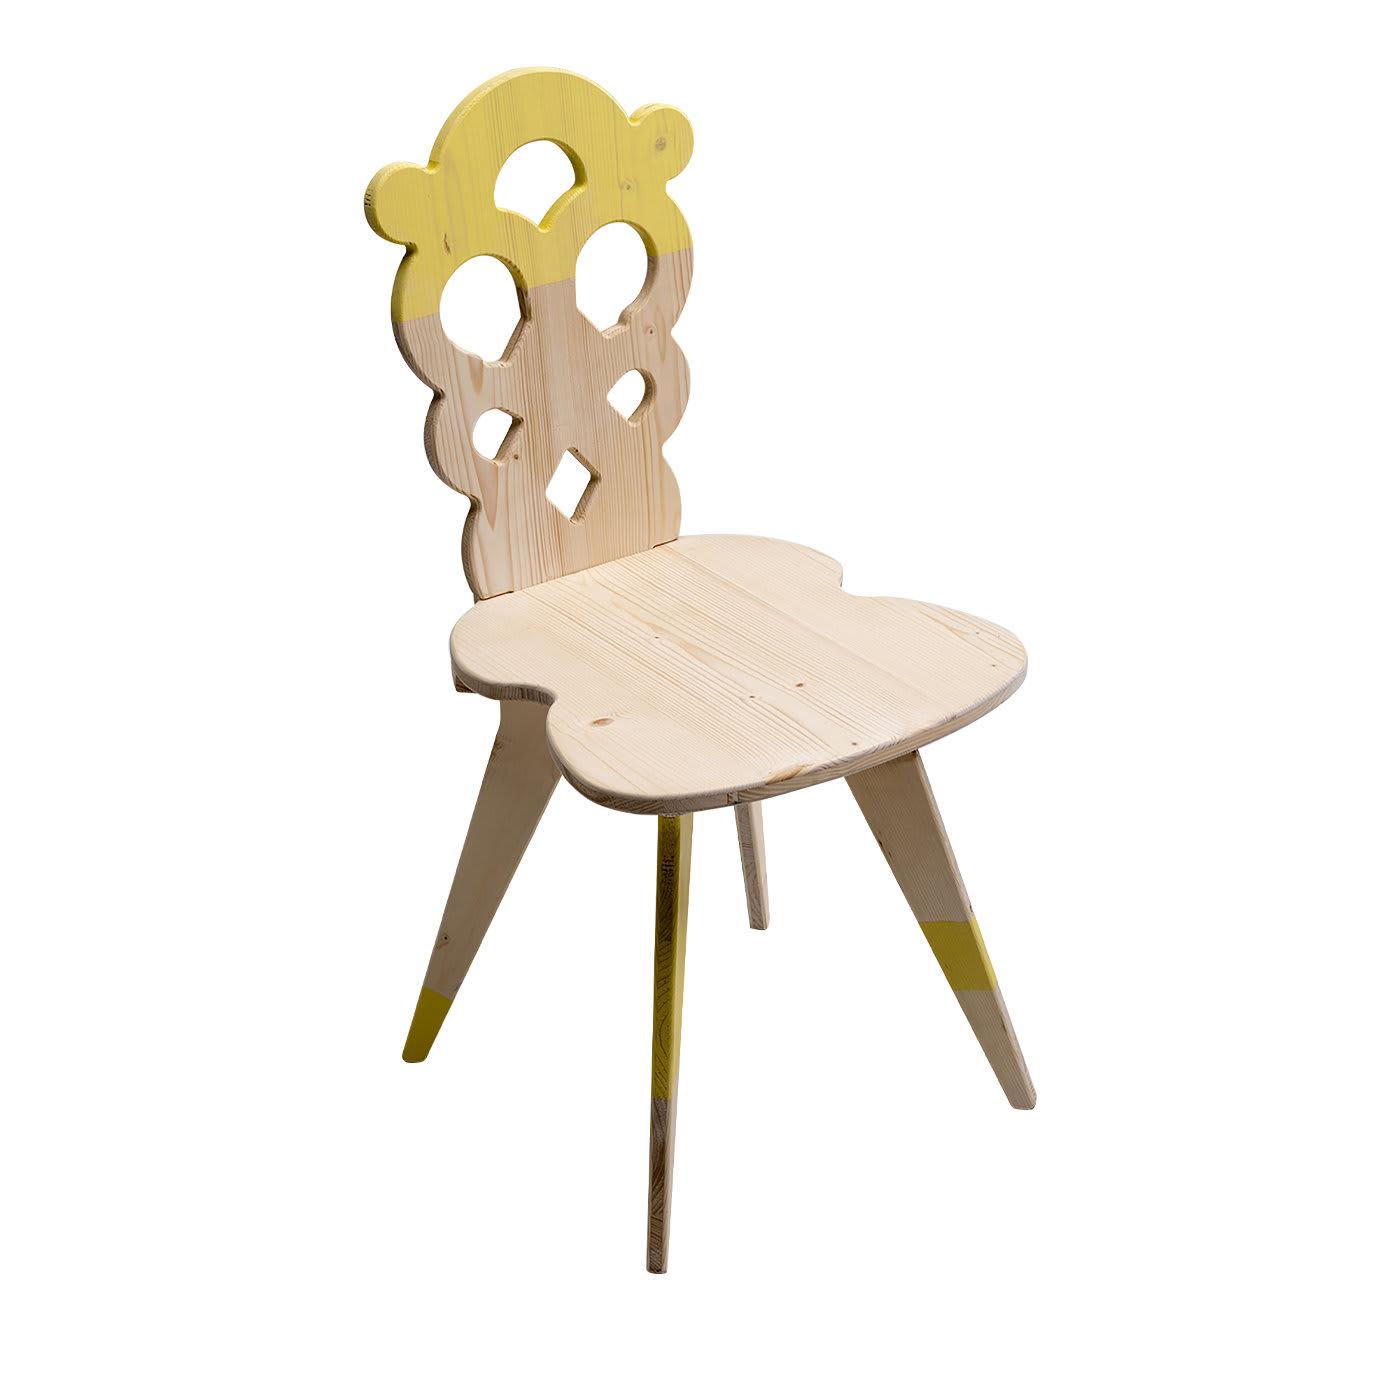 South Tyrol Chair #4 - Andrea de Chirico